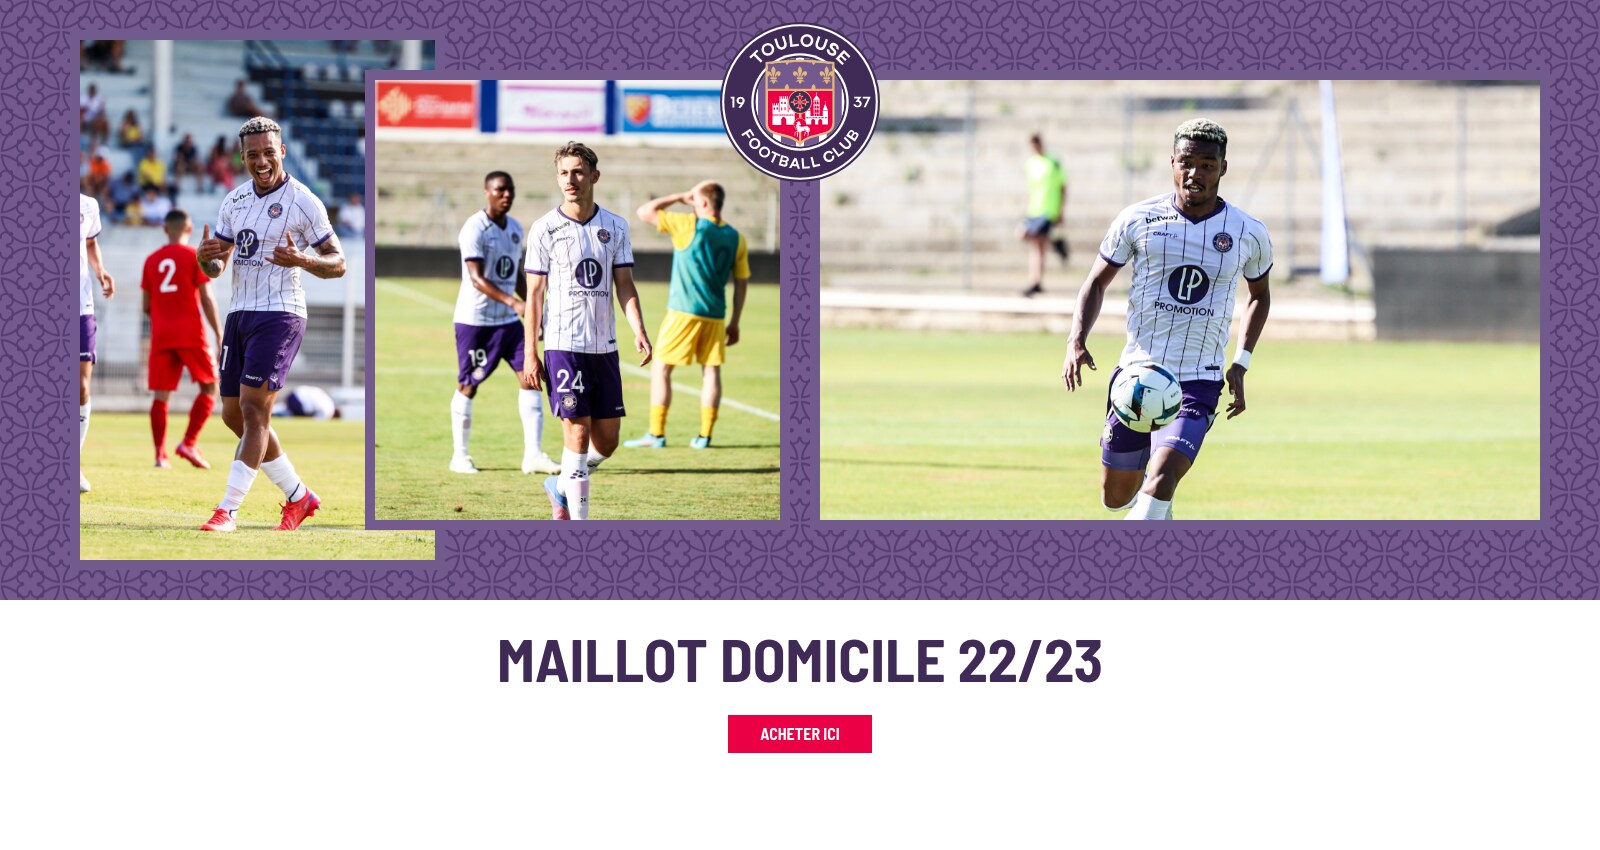 Maillot Domicile 2022-23 - Acheter Ici